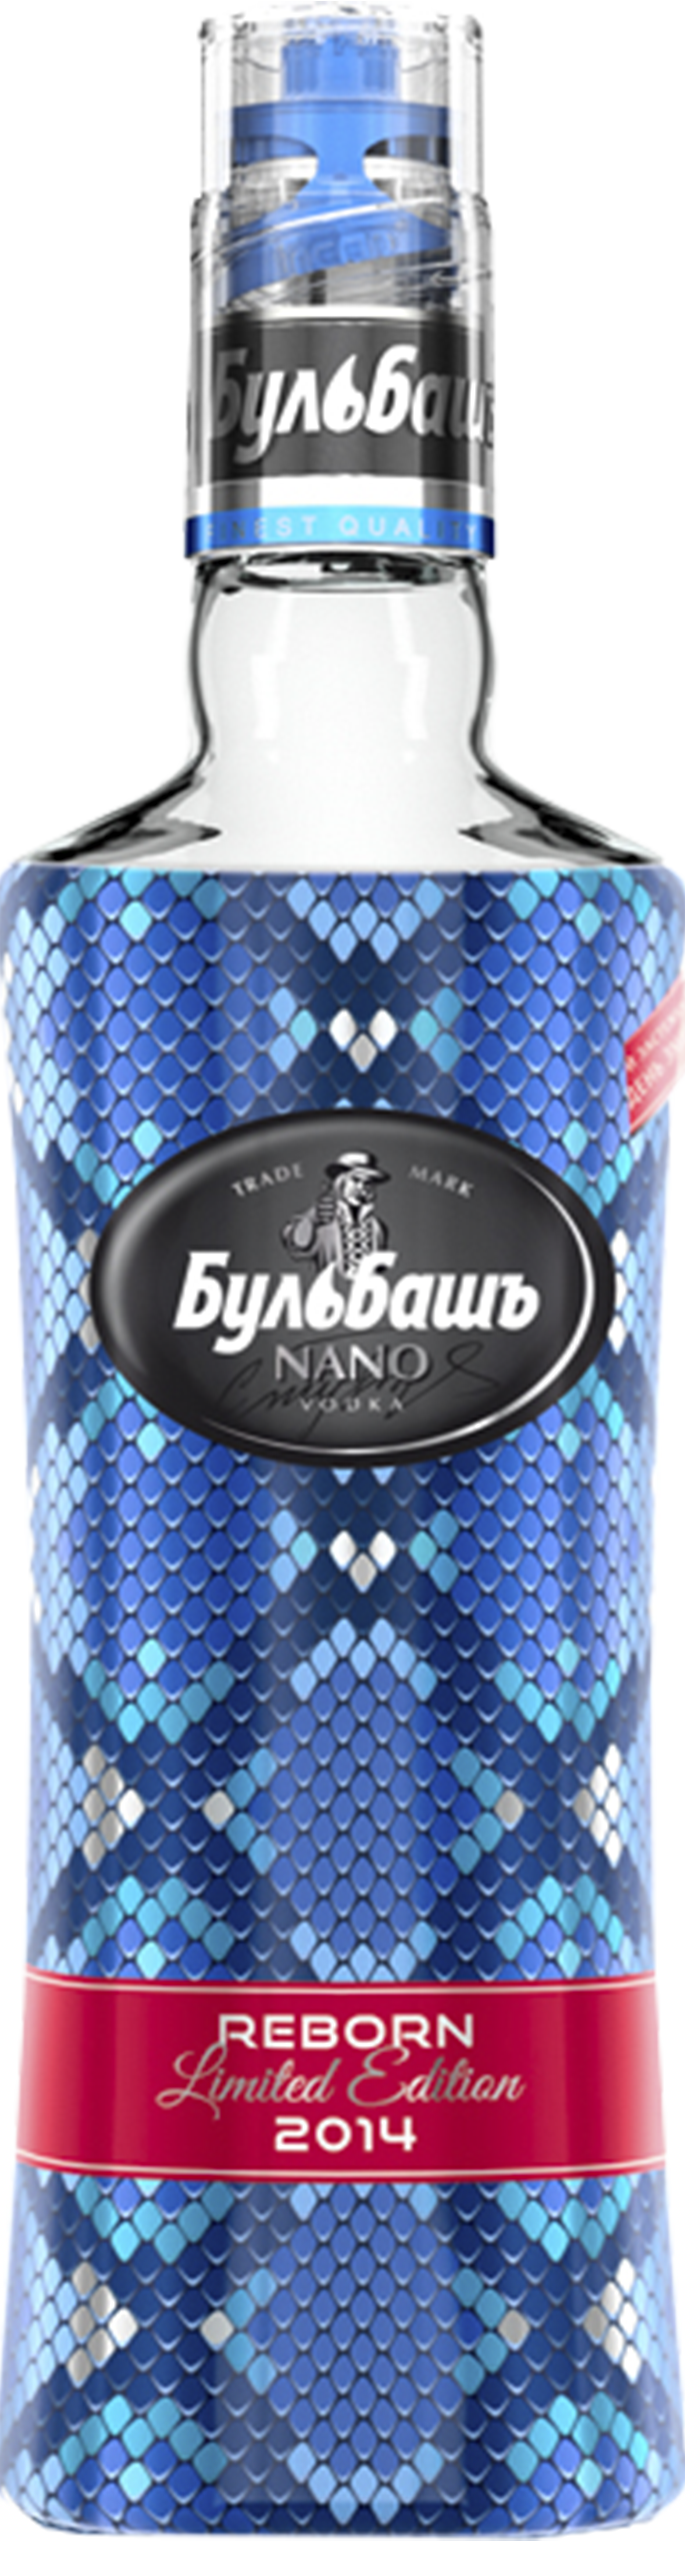 Бульбашъ® Nano Reborn 2014